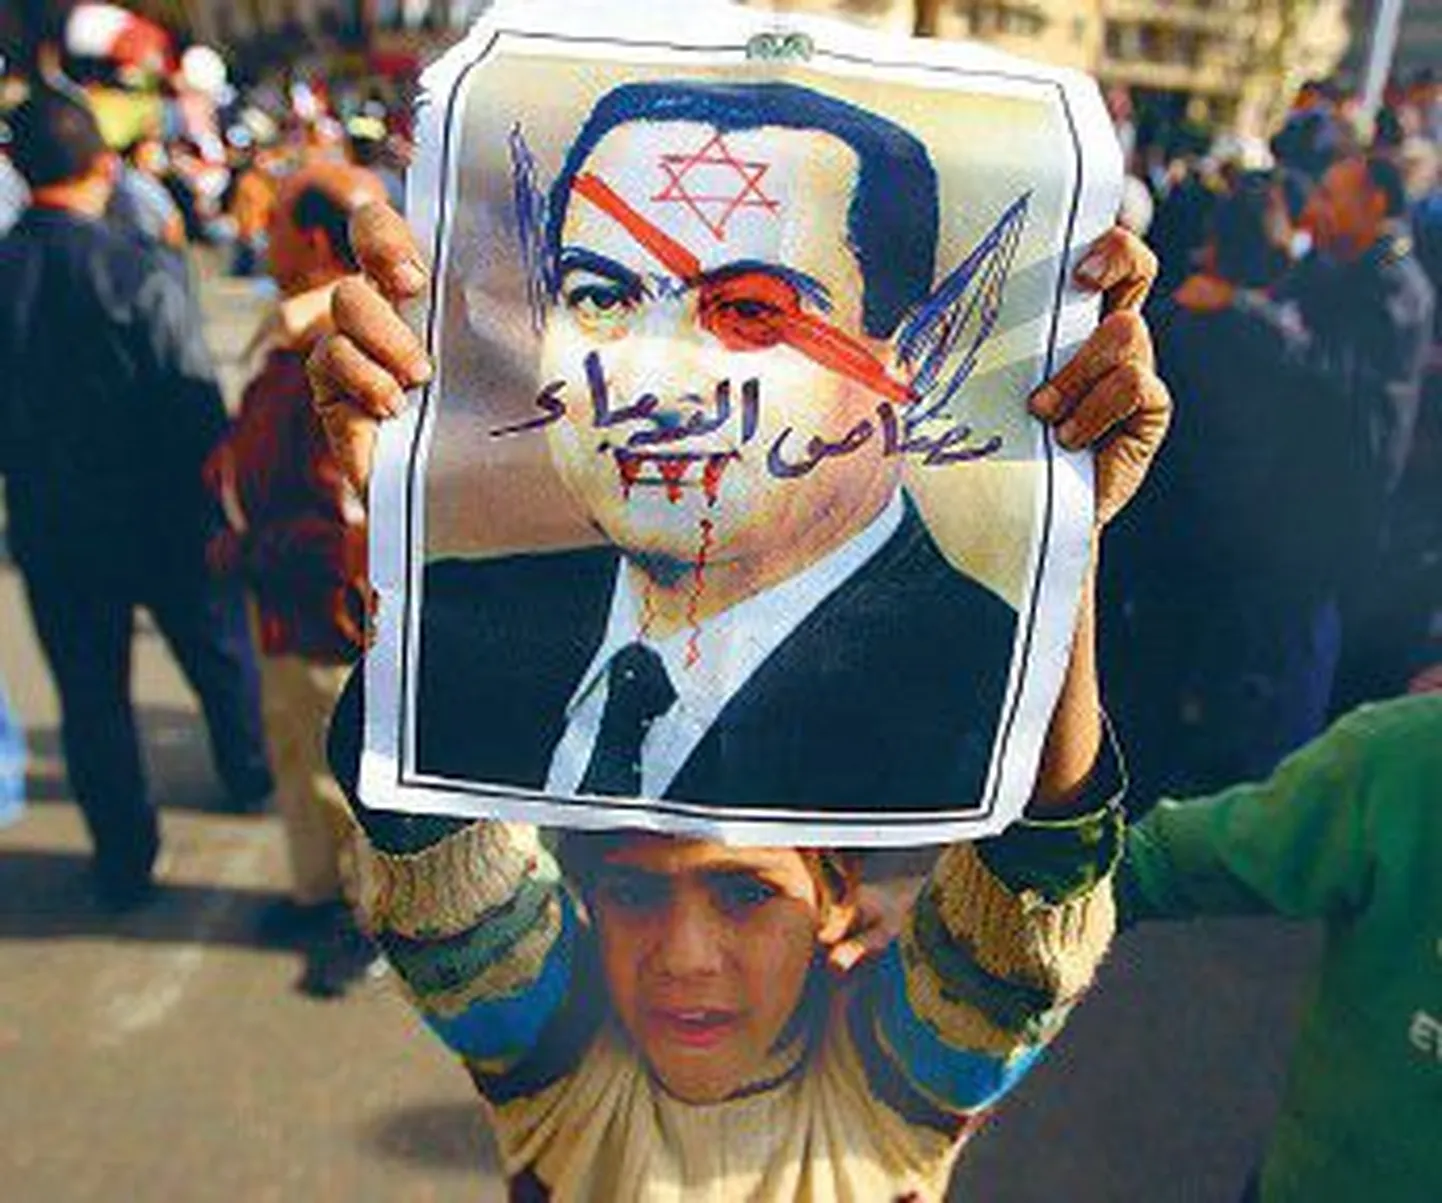 Протестующие требуют отставки президента Хосни Мубарака и проведения экономических и политических реформ.